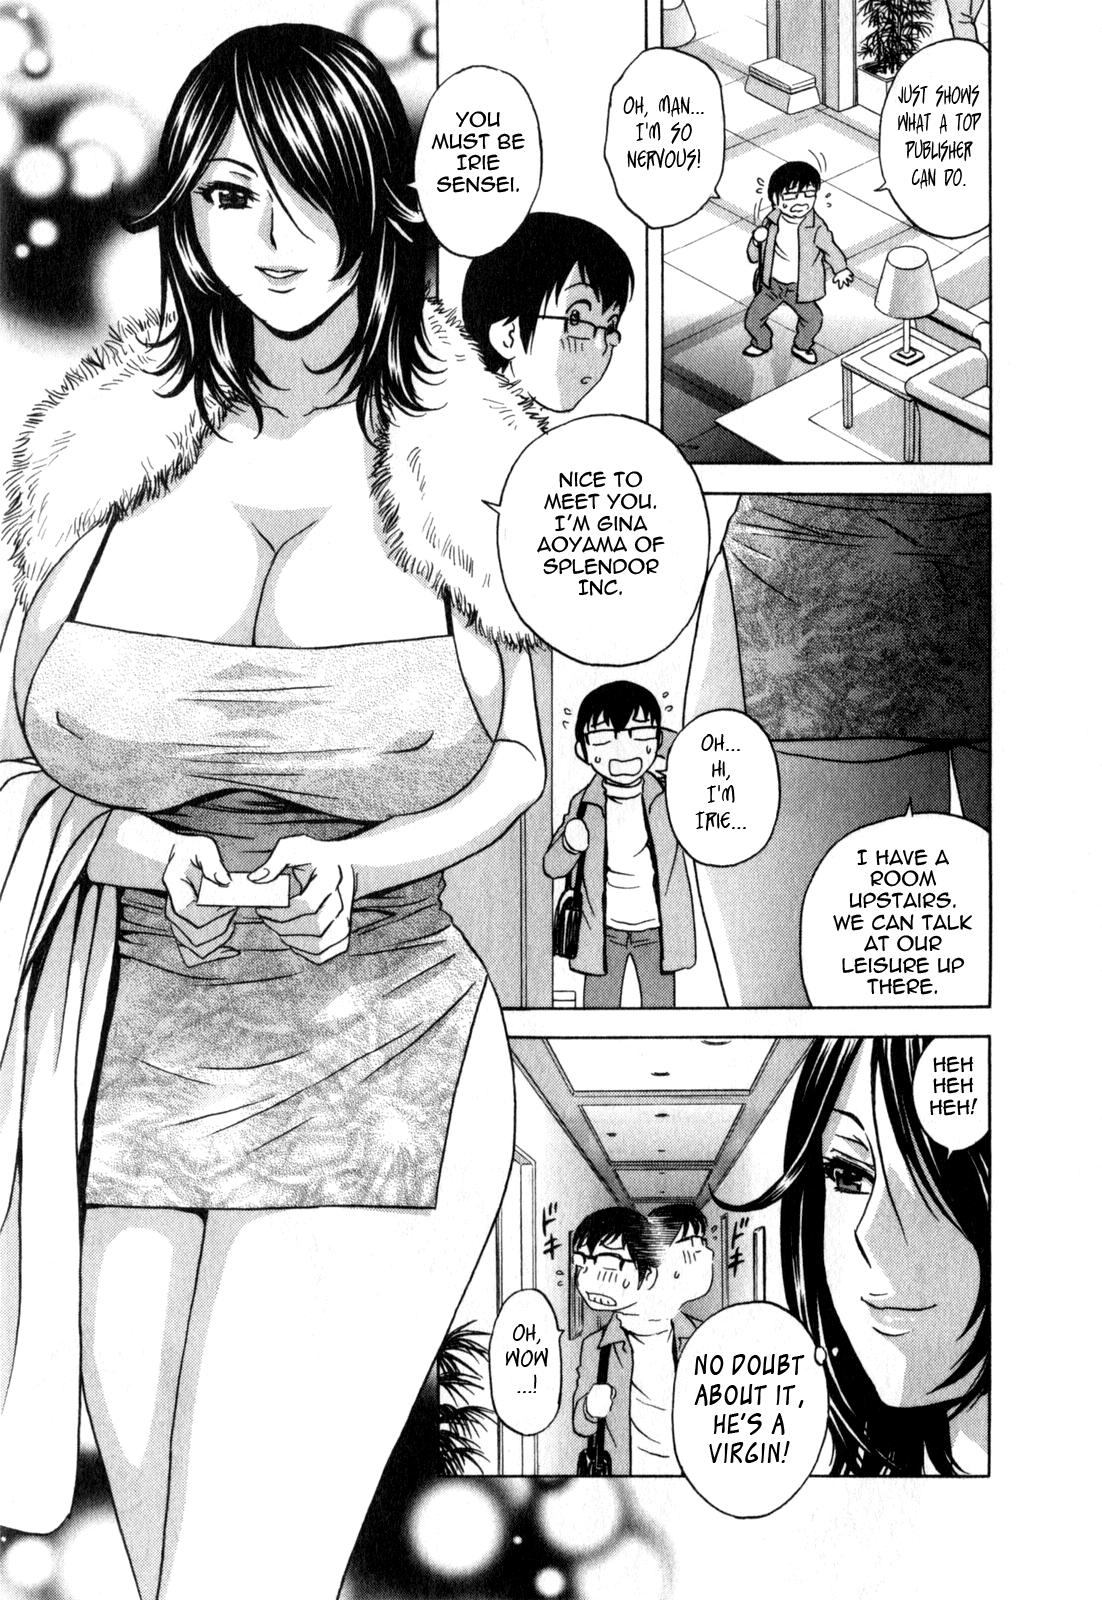 Life with Married Women Just Like a Manga 3 48